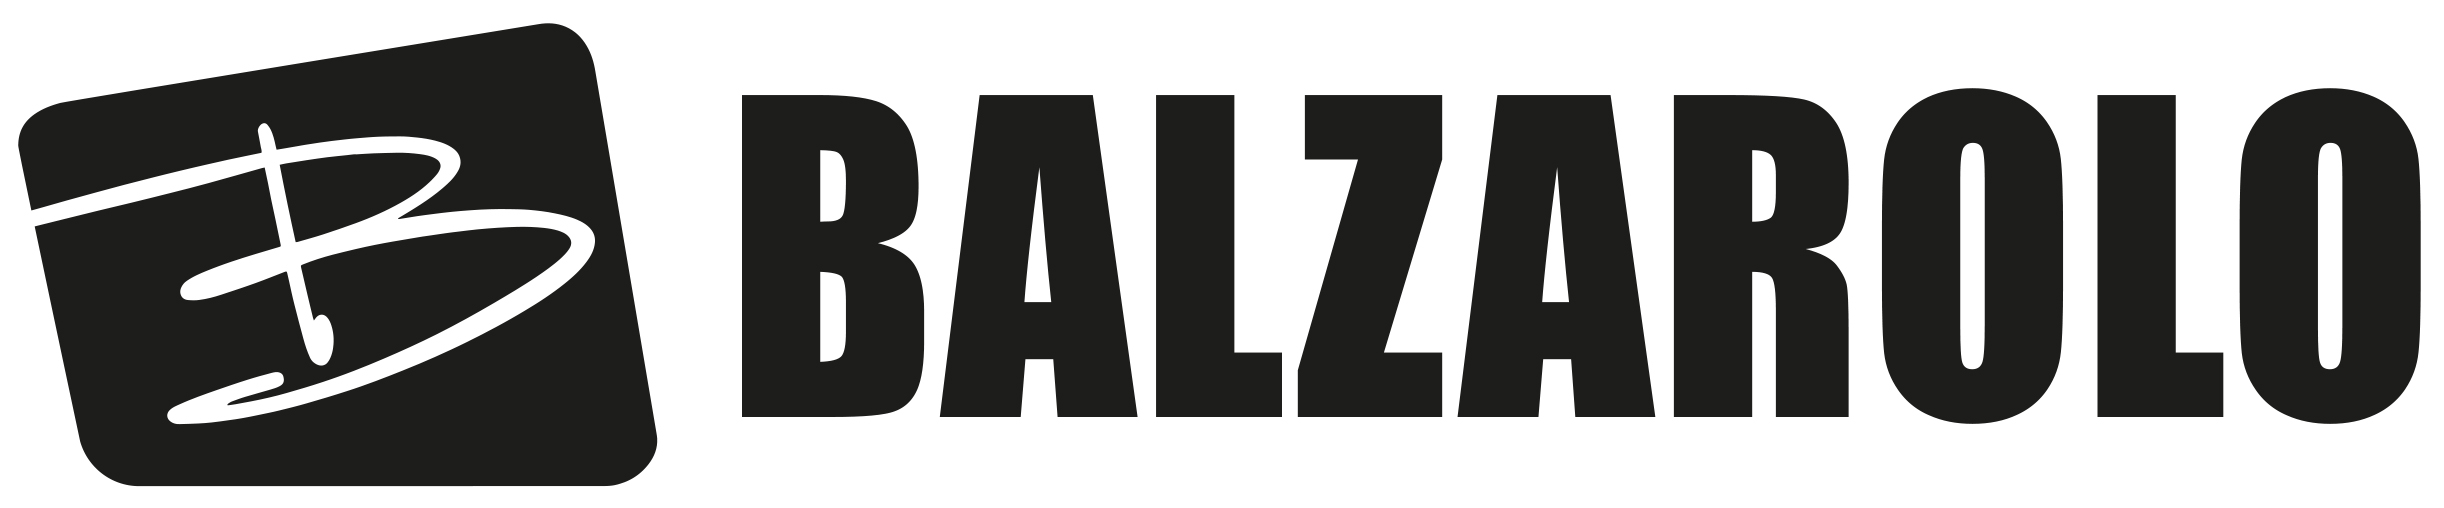 Logo_Balzarolo_classic.jpg